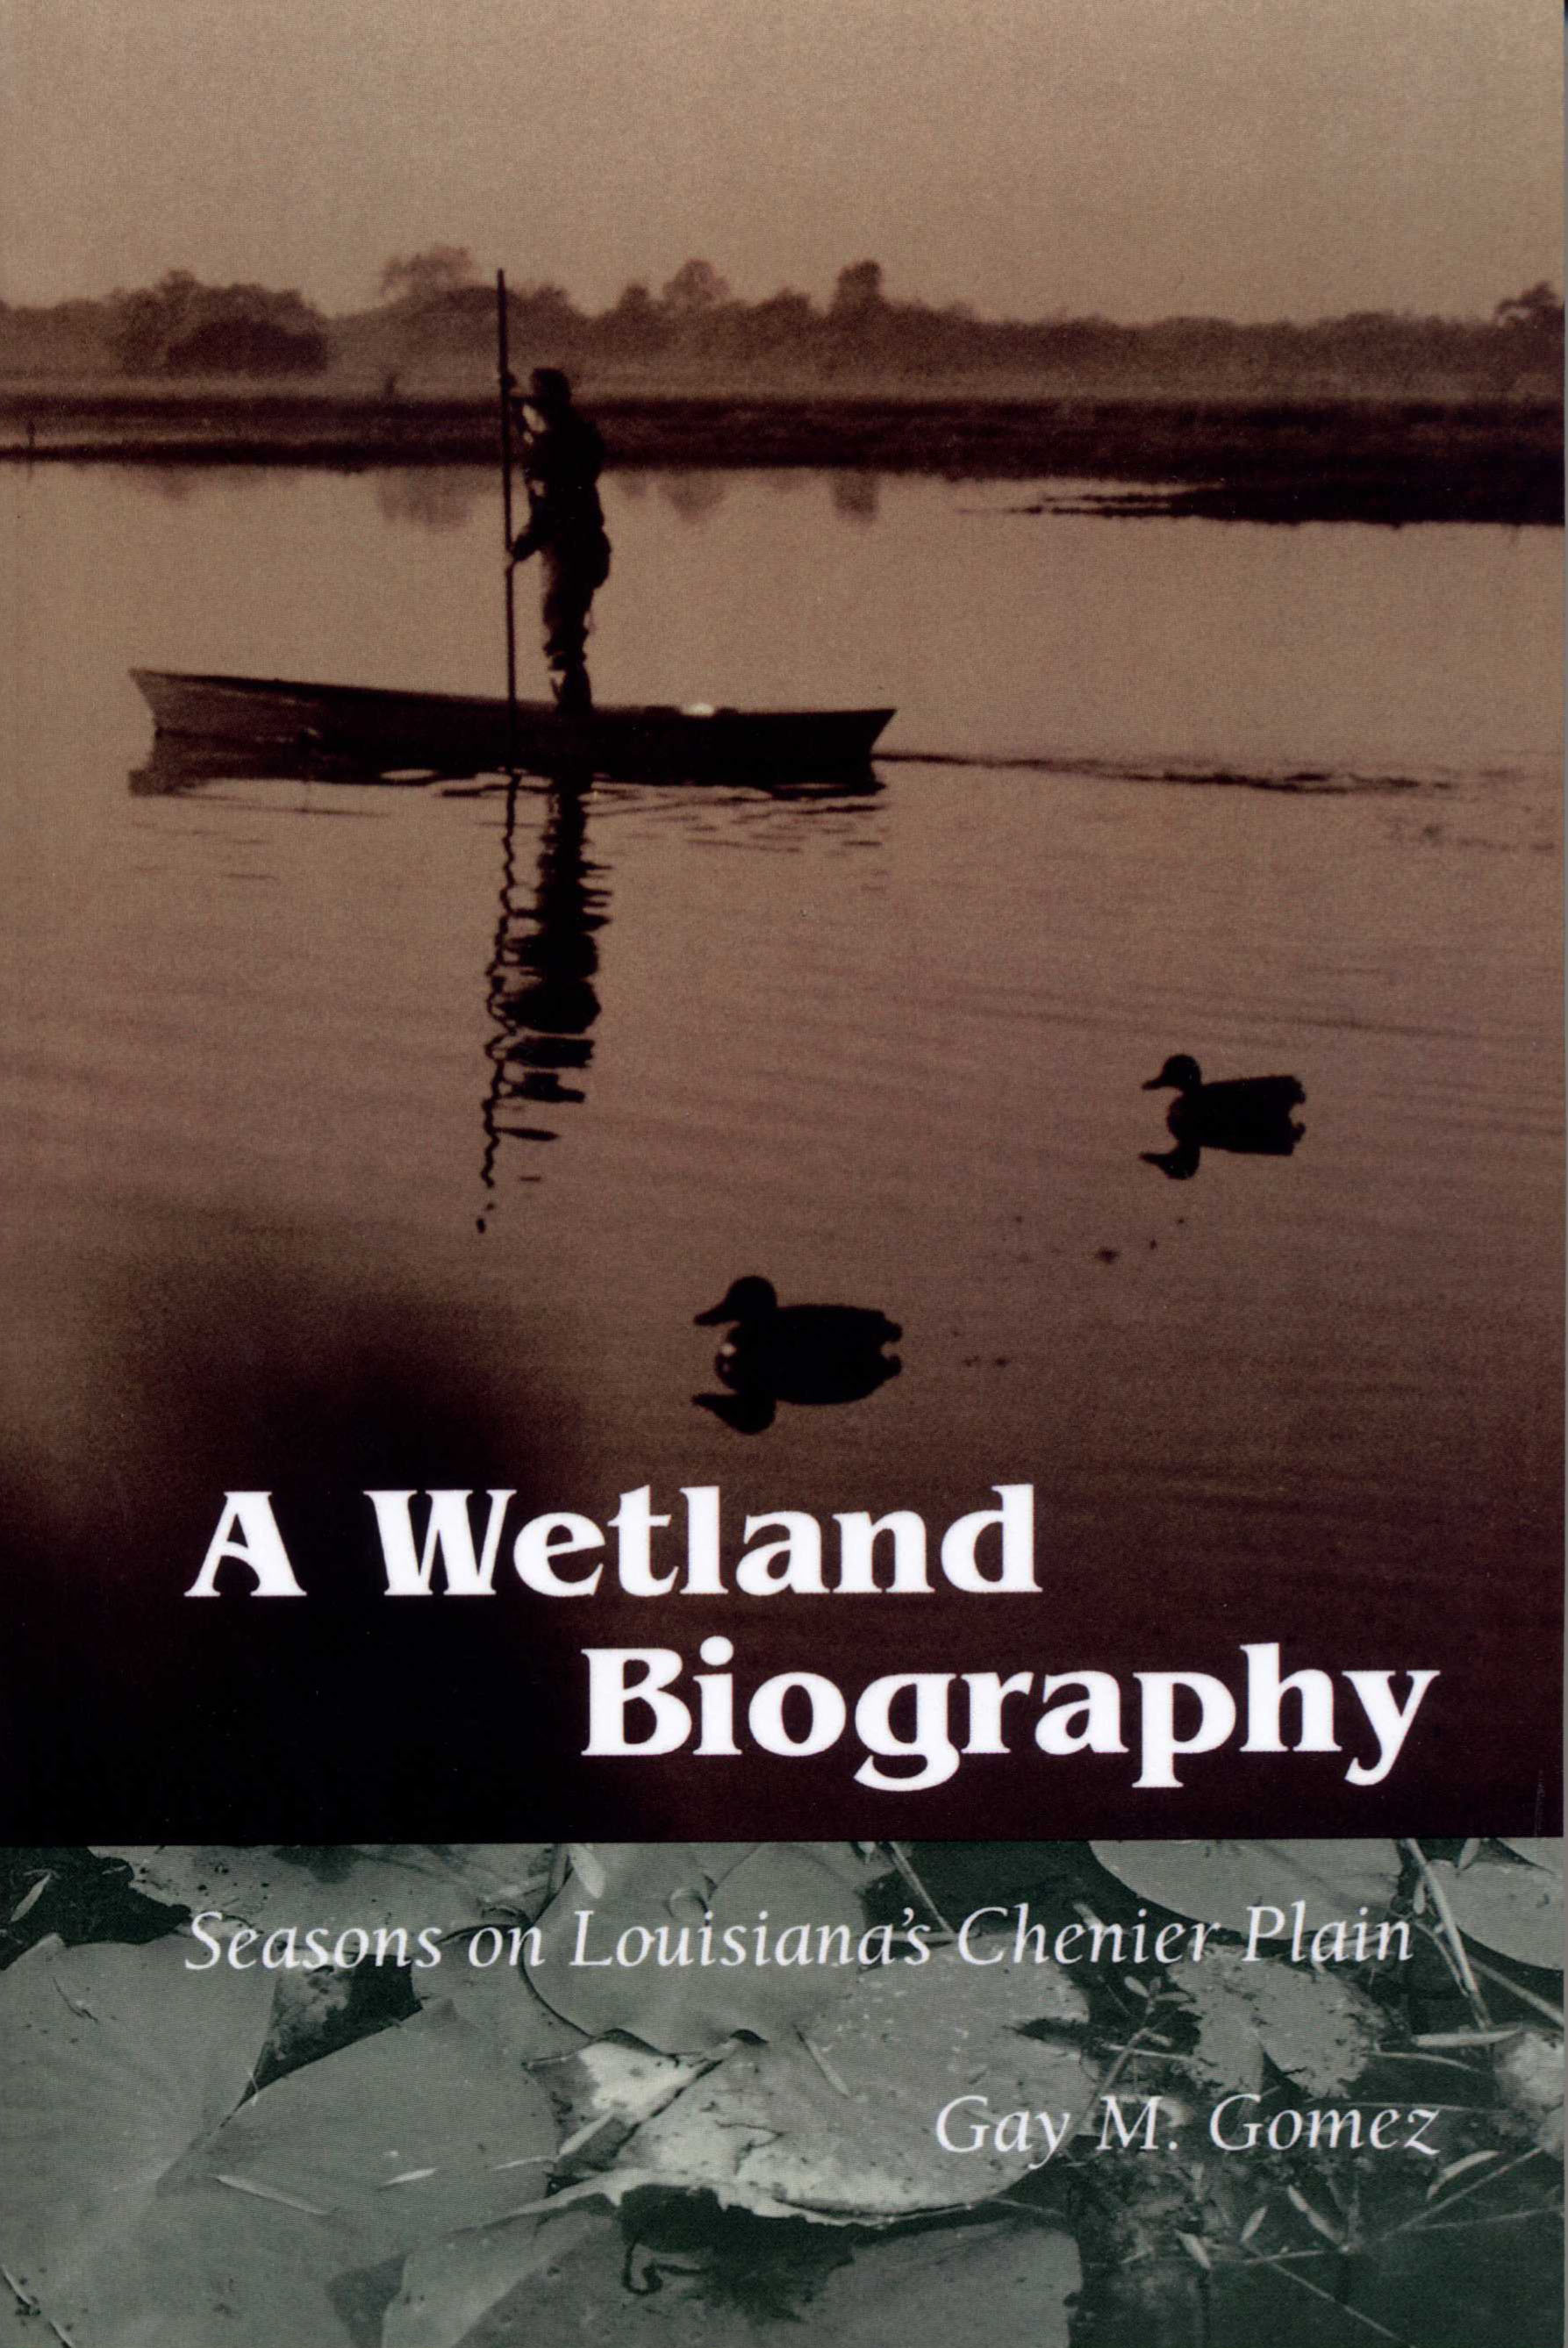 Wetland Biography